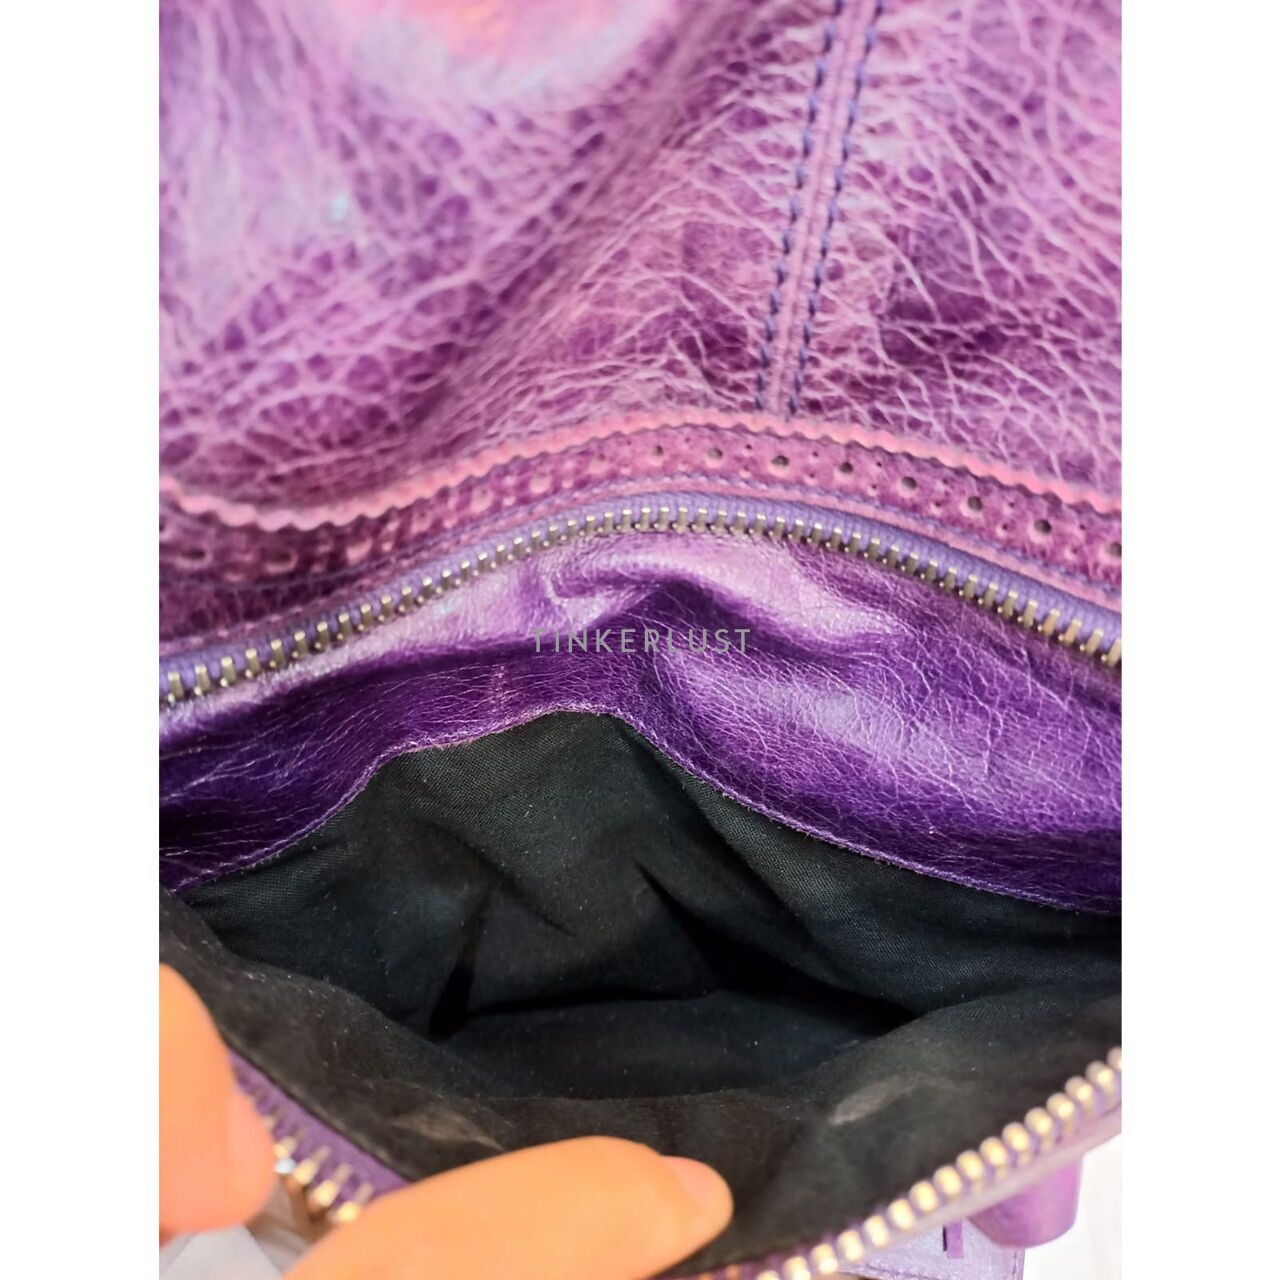 Balenciaga Giant Travel Bag Leather Purple Satchel